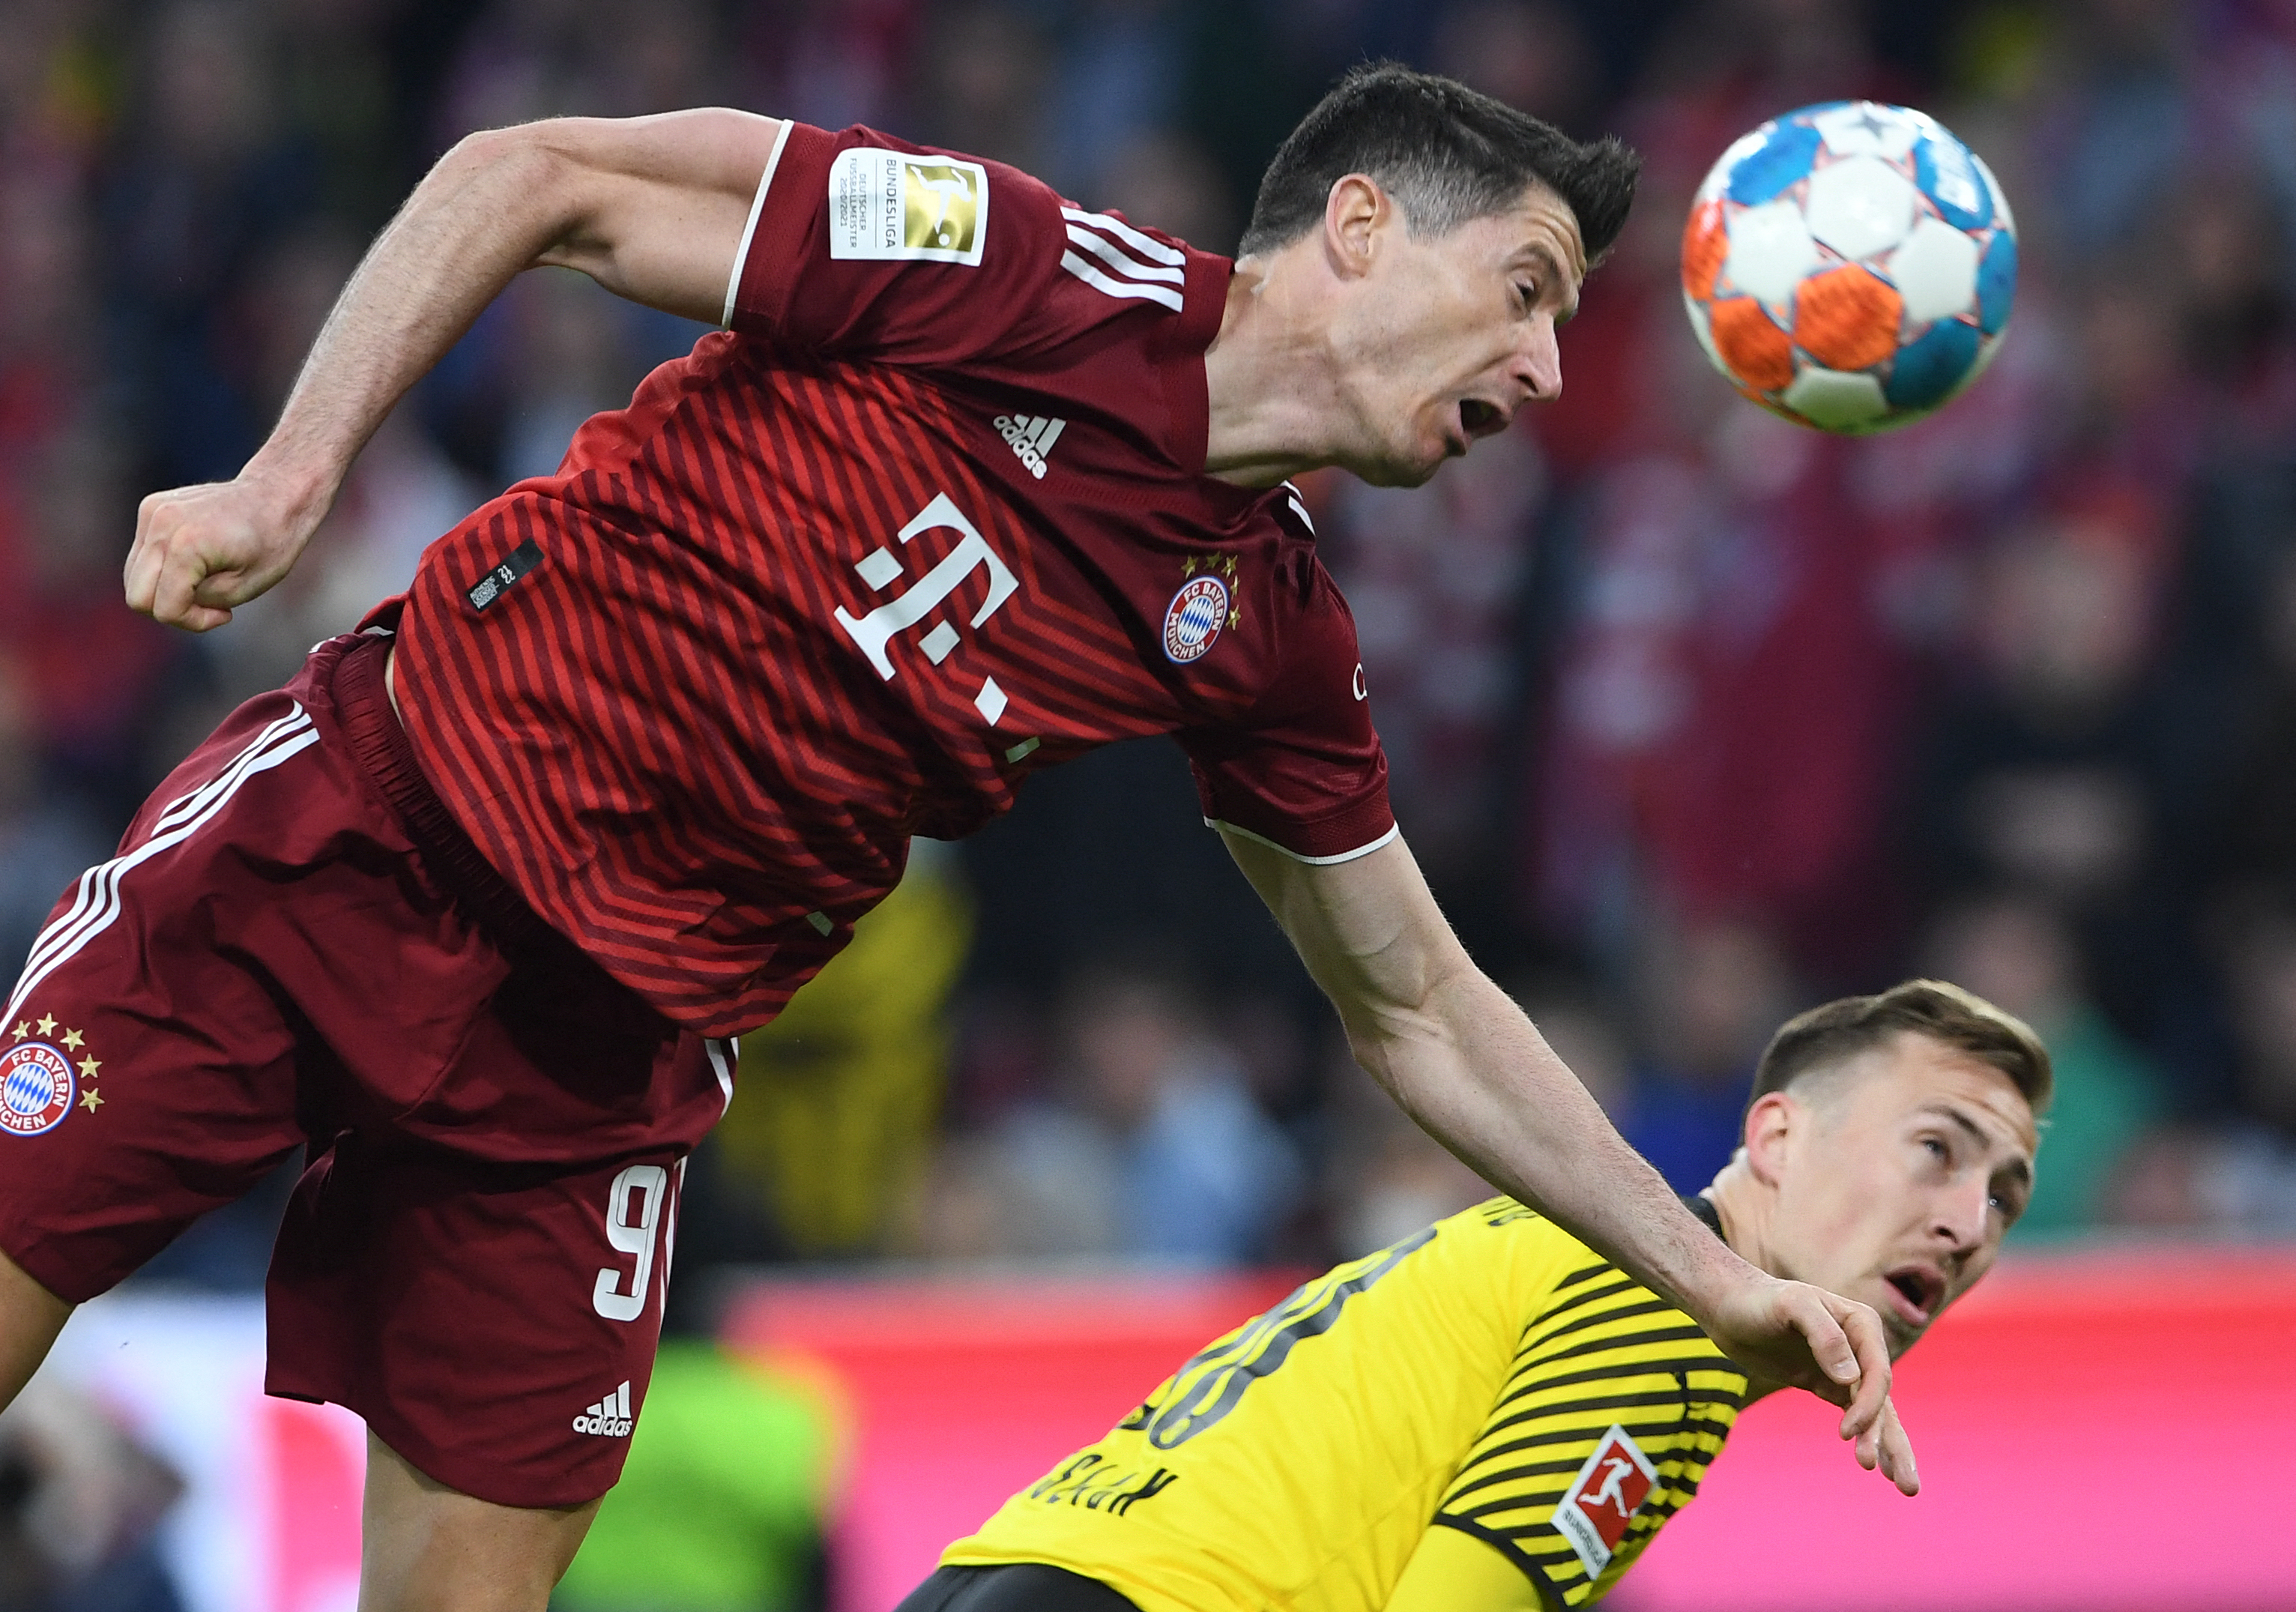 "Mi etapa en el Bayern ha terminado", afirma Lewandowski